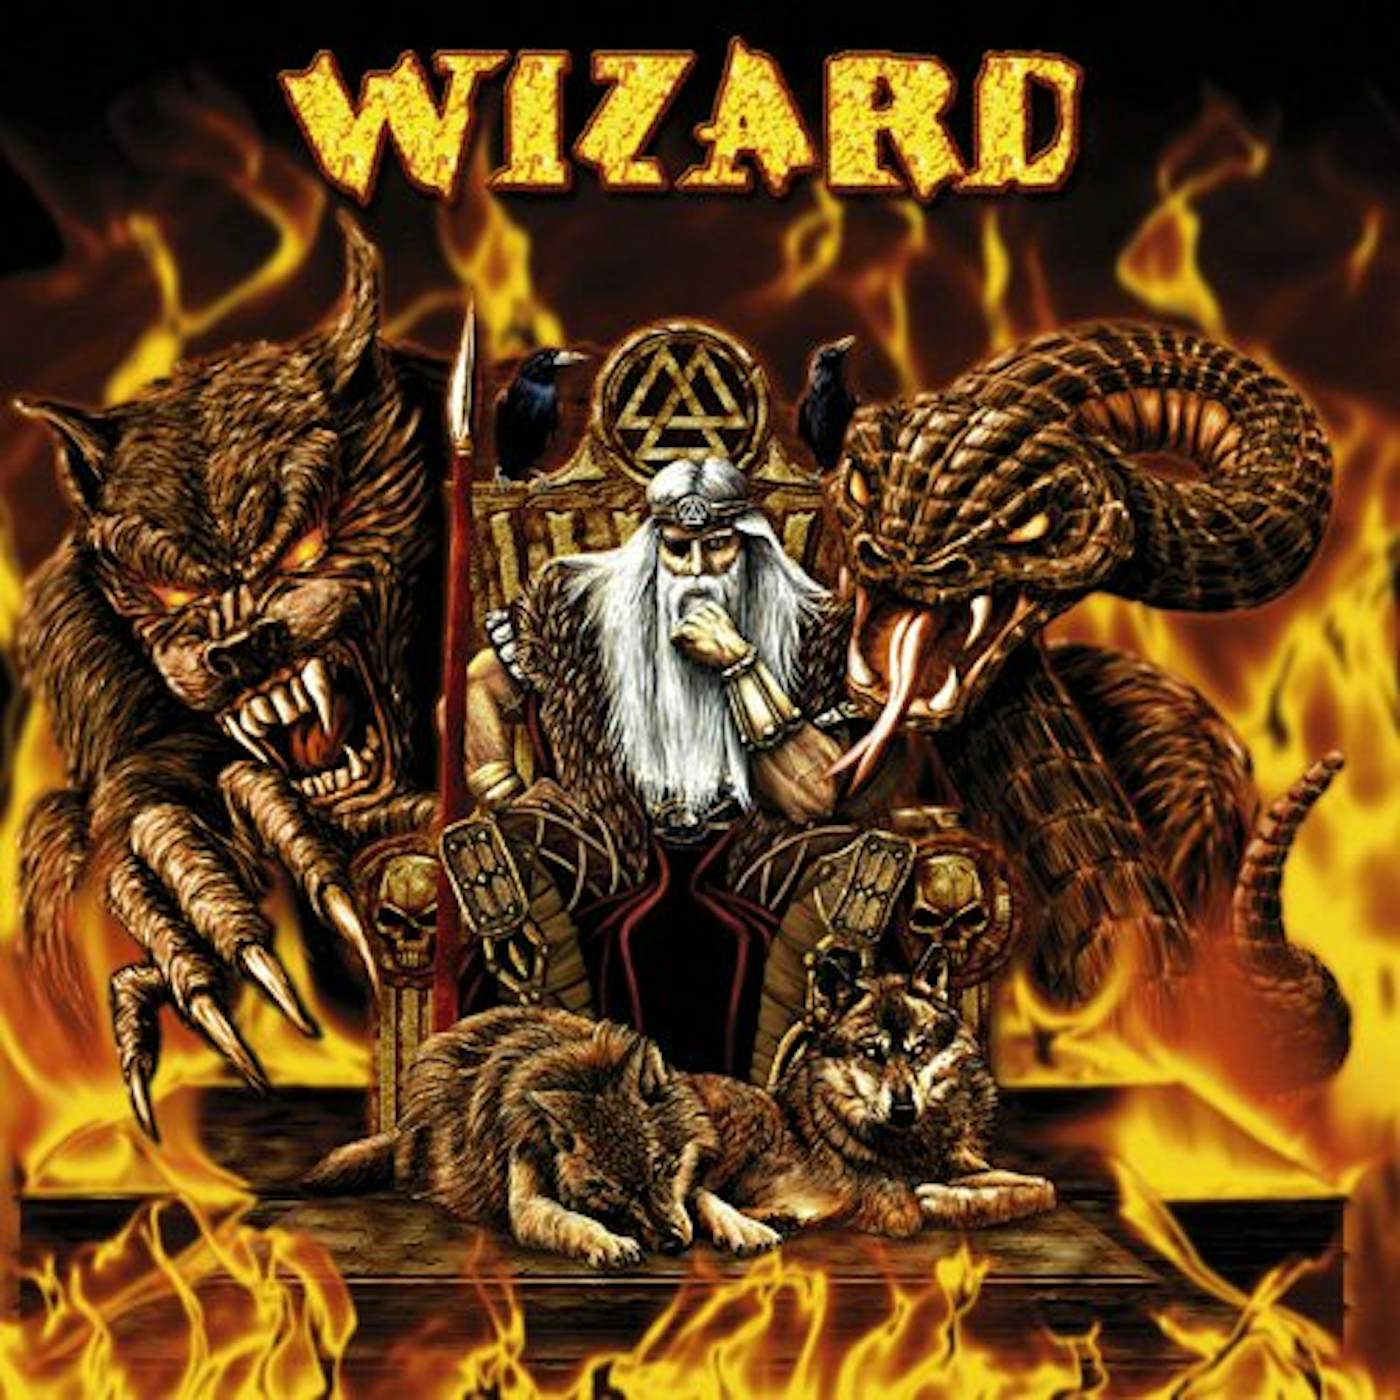 Wizard ODIN CD